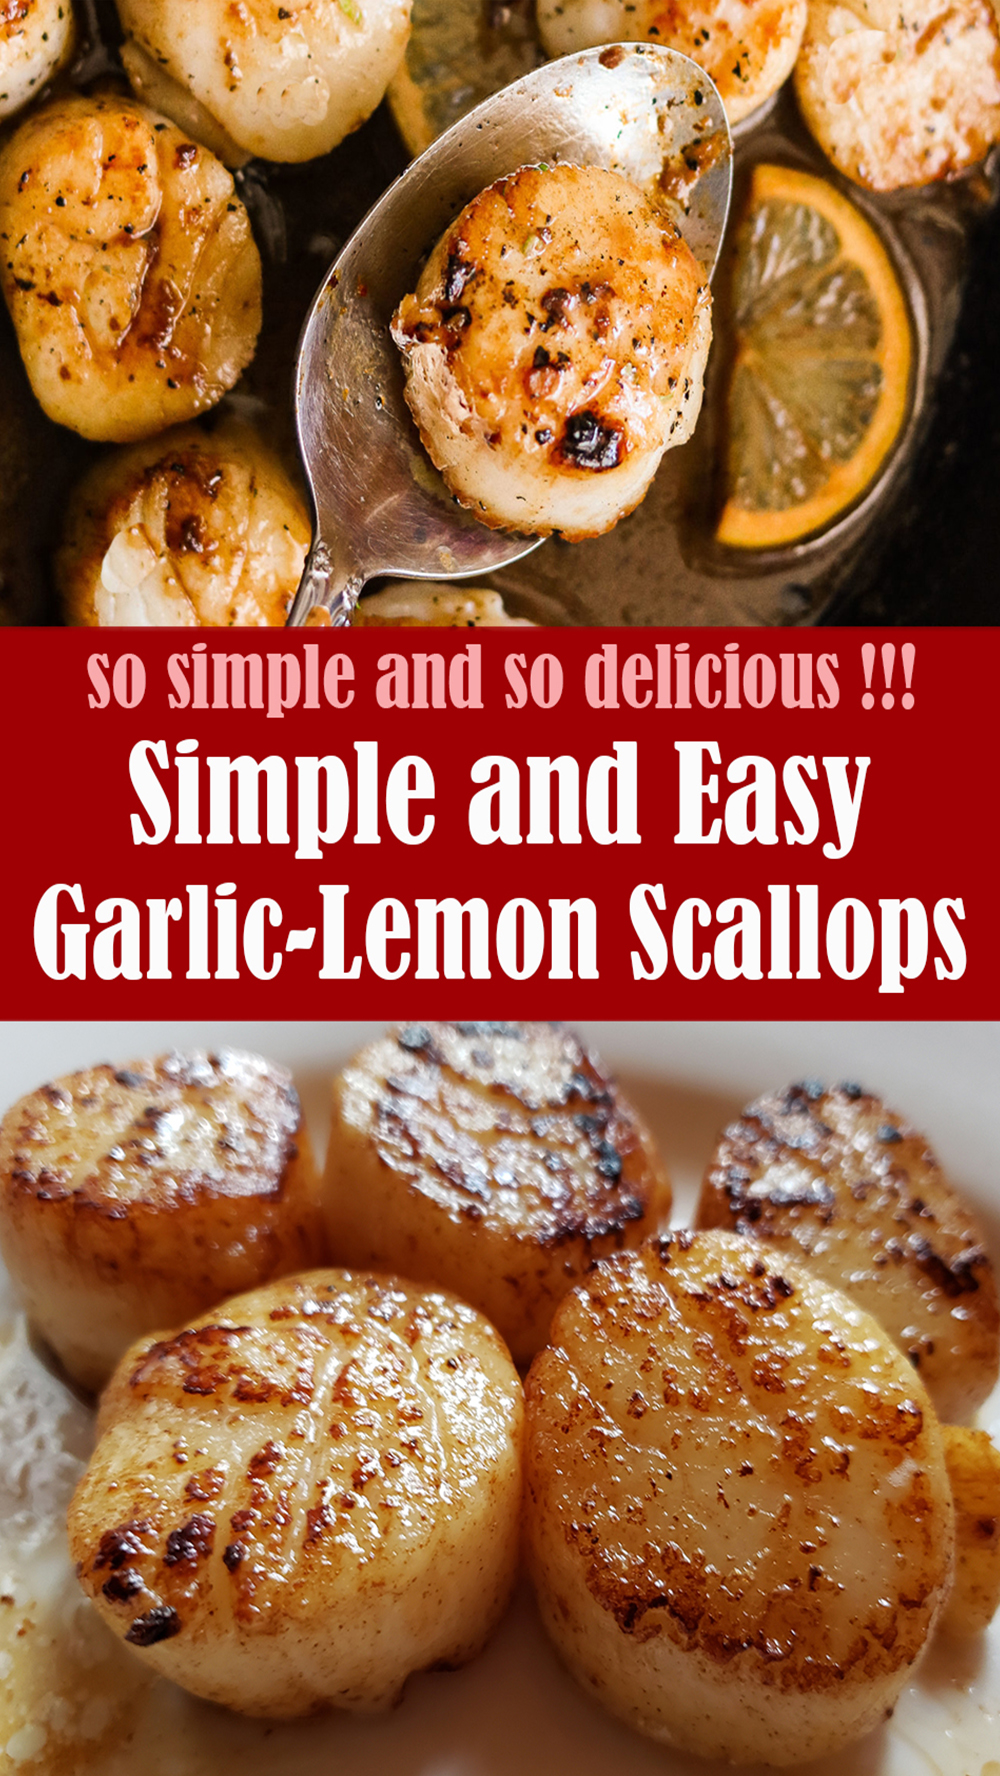 Simple and Easy Garlic-Lemon Scallops